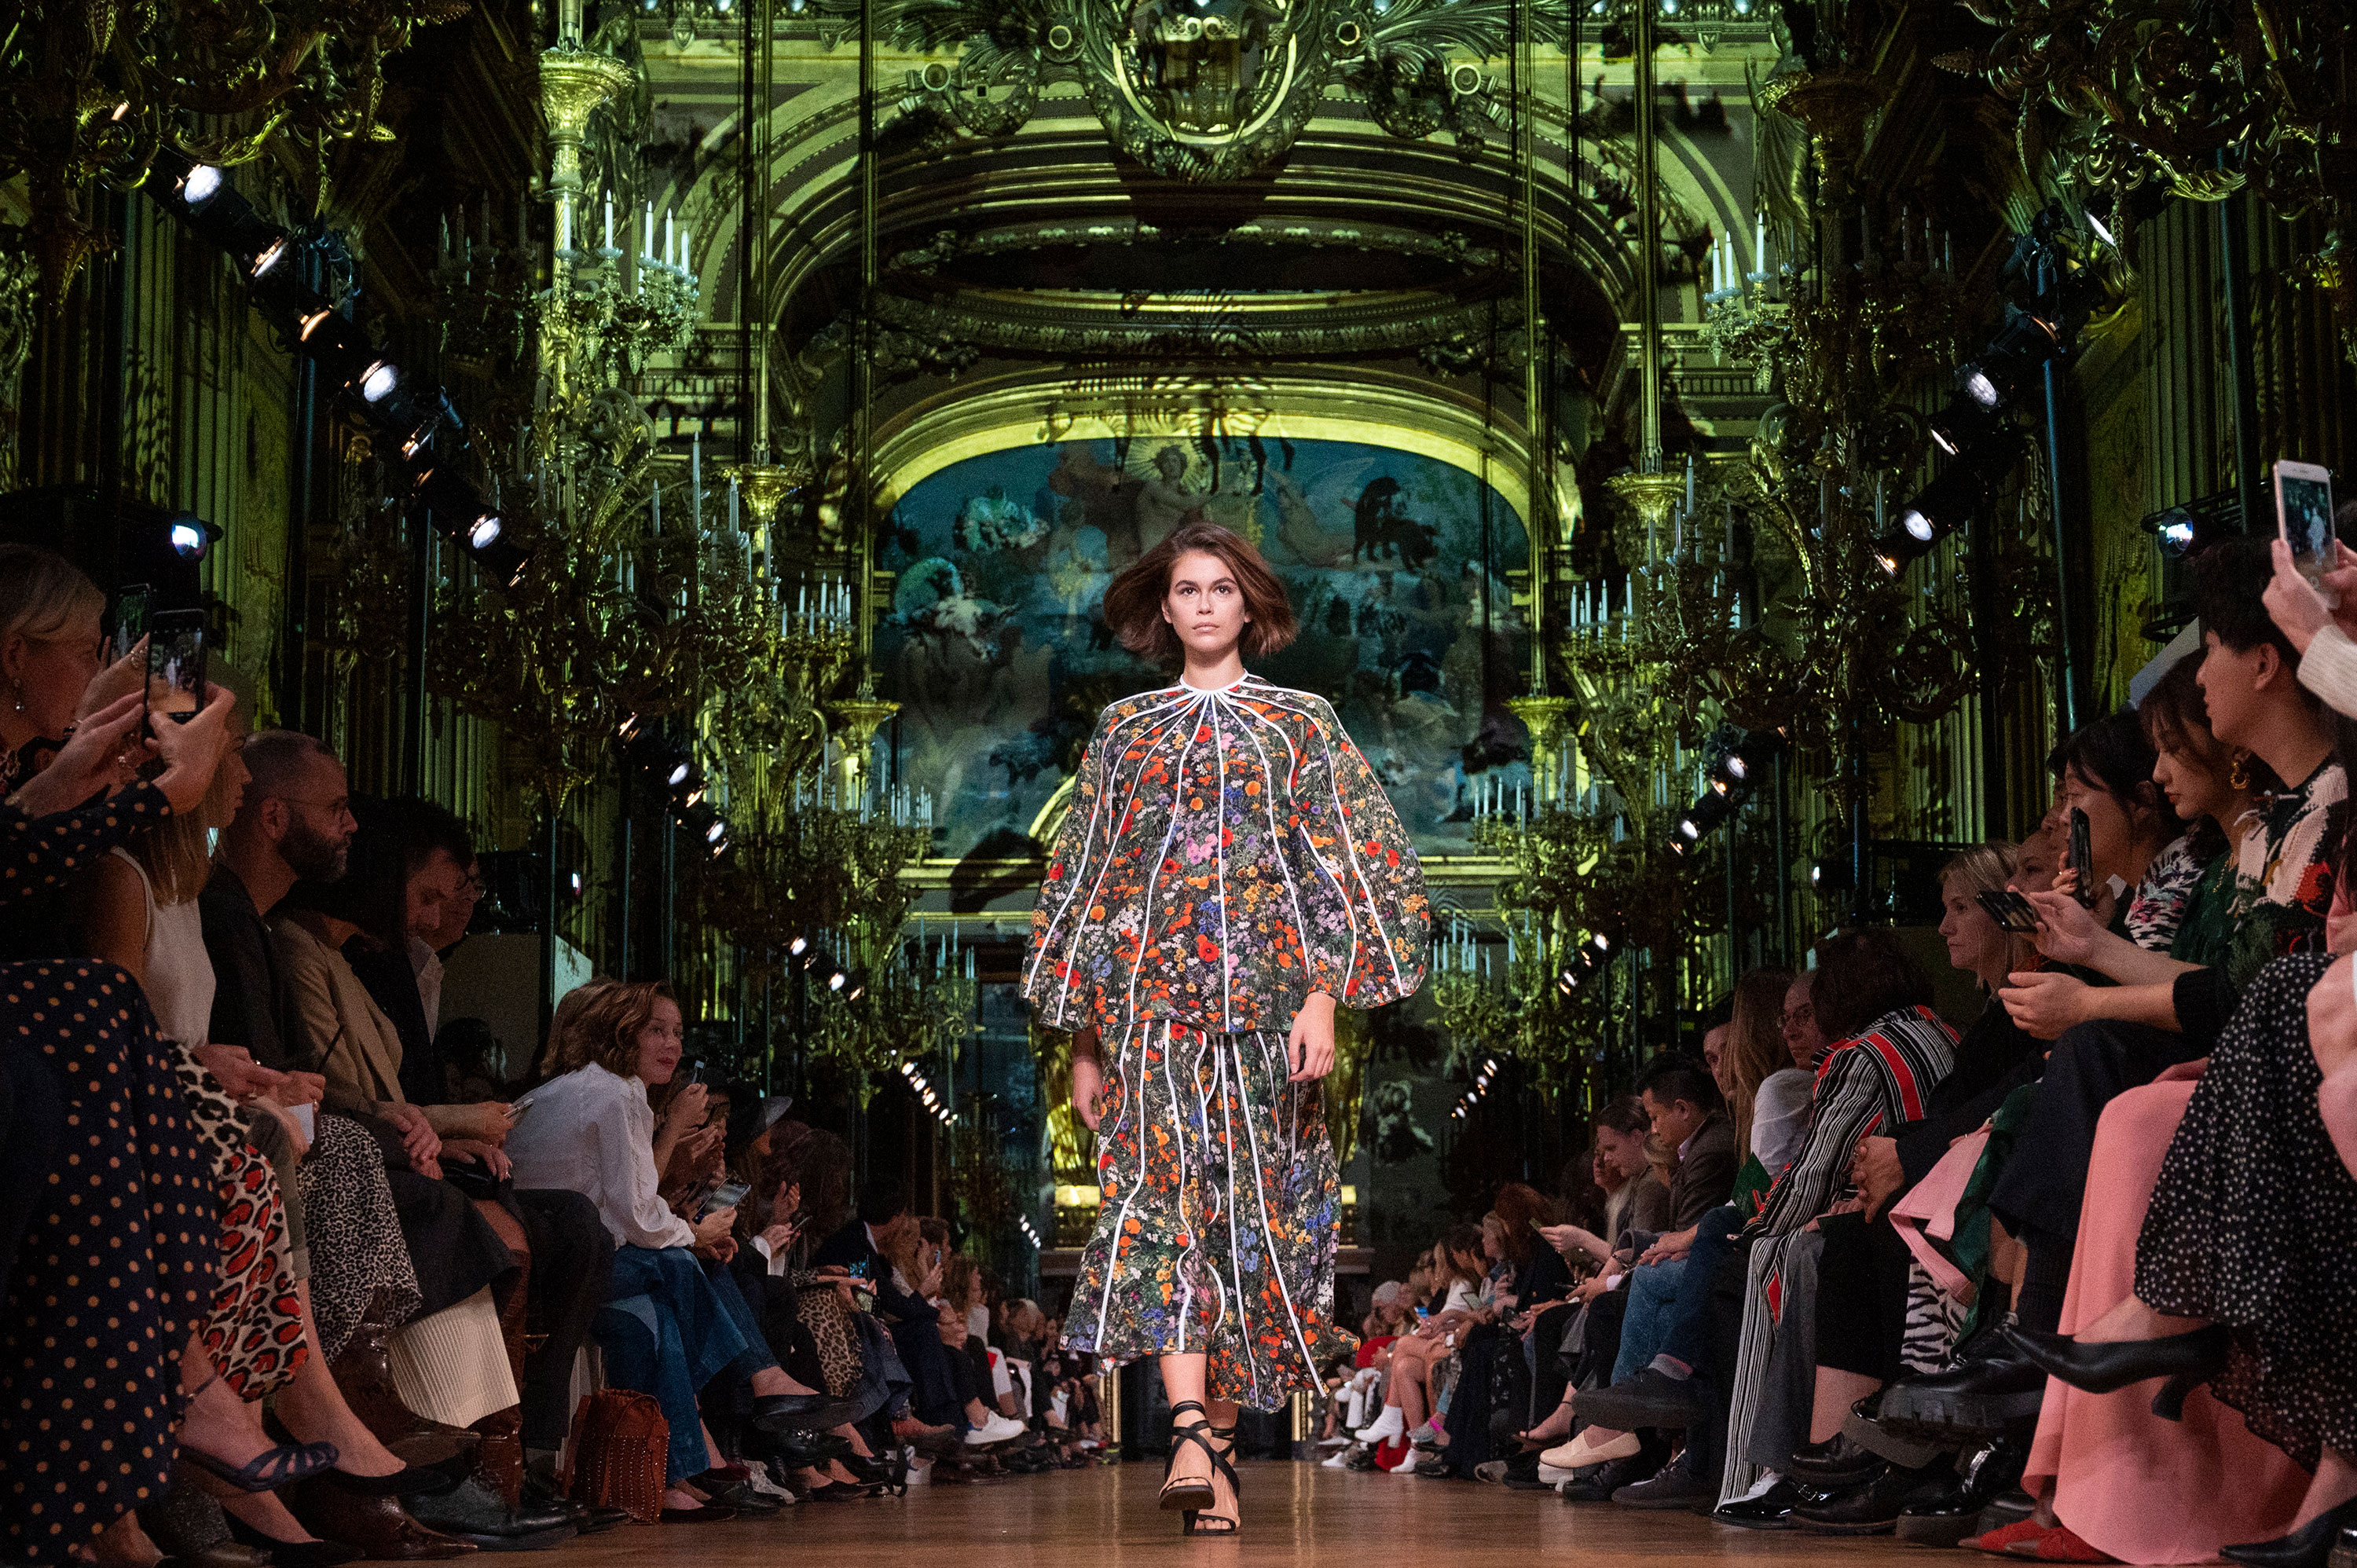 Paris Fashion Week will go ahead in despite Covid-19 - Style